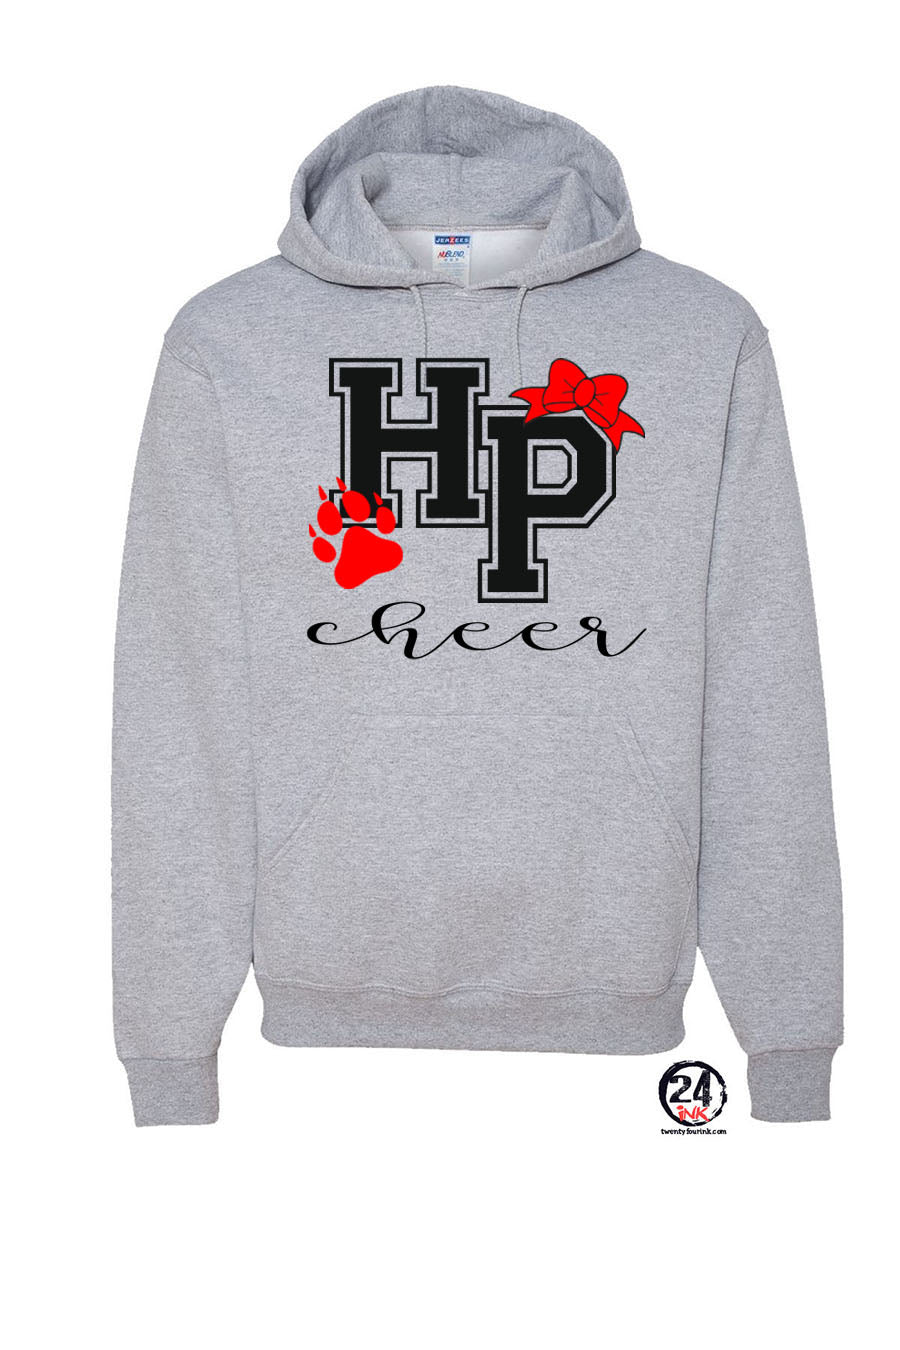 High Point cheer Design 3 Hooded Sweatshirt